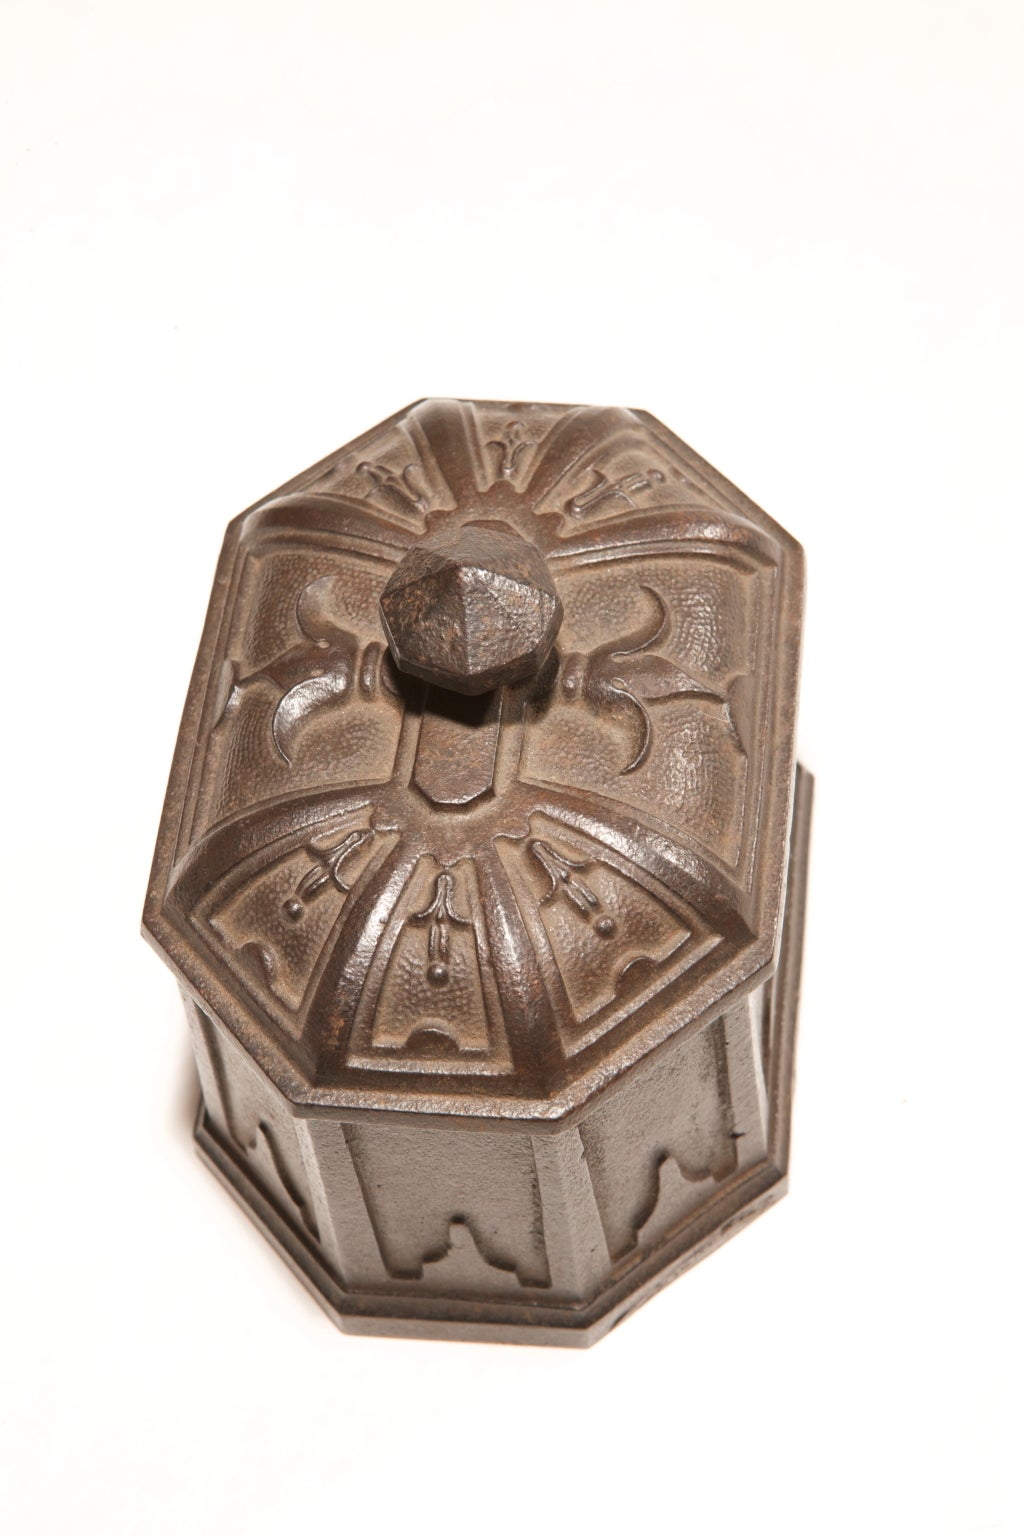 Rare English tobacco cast iron box, Victorian time: for connoisseurs !
O/1988.